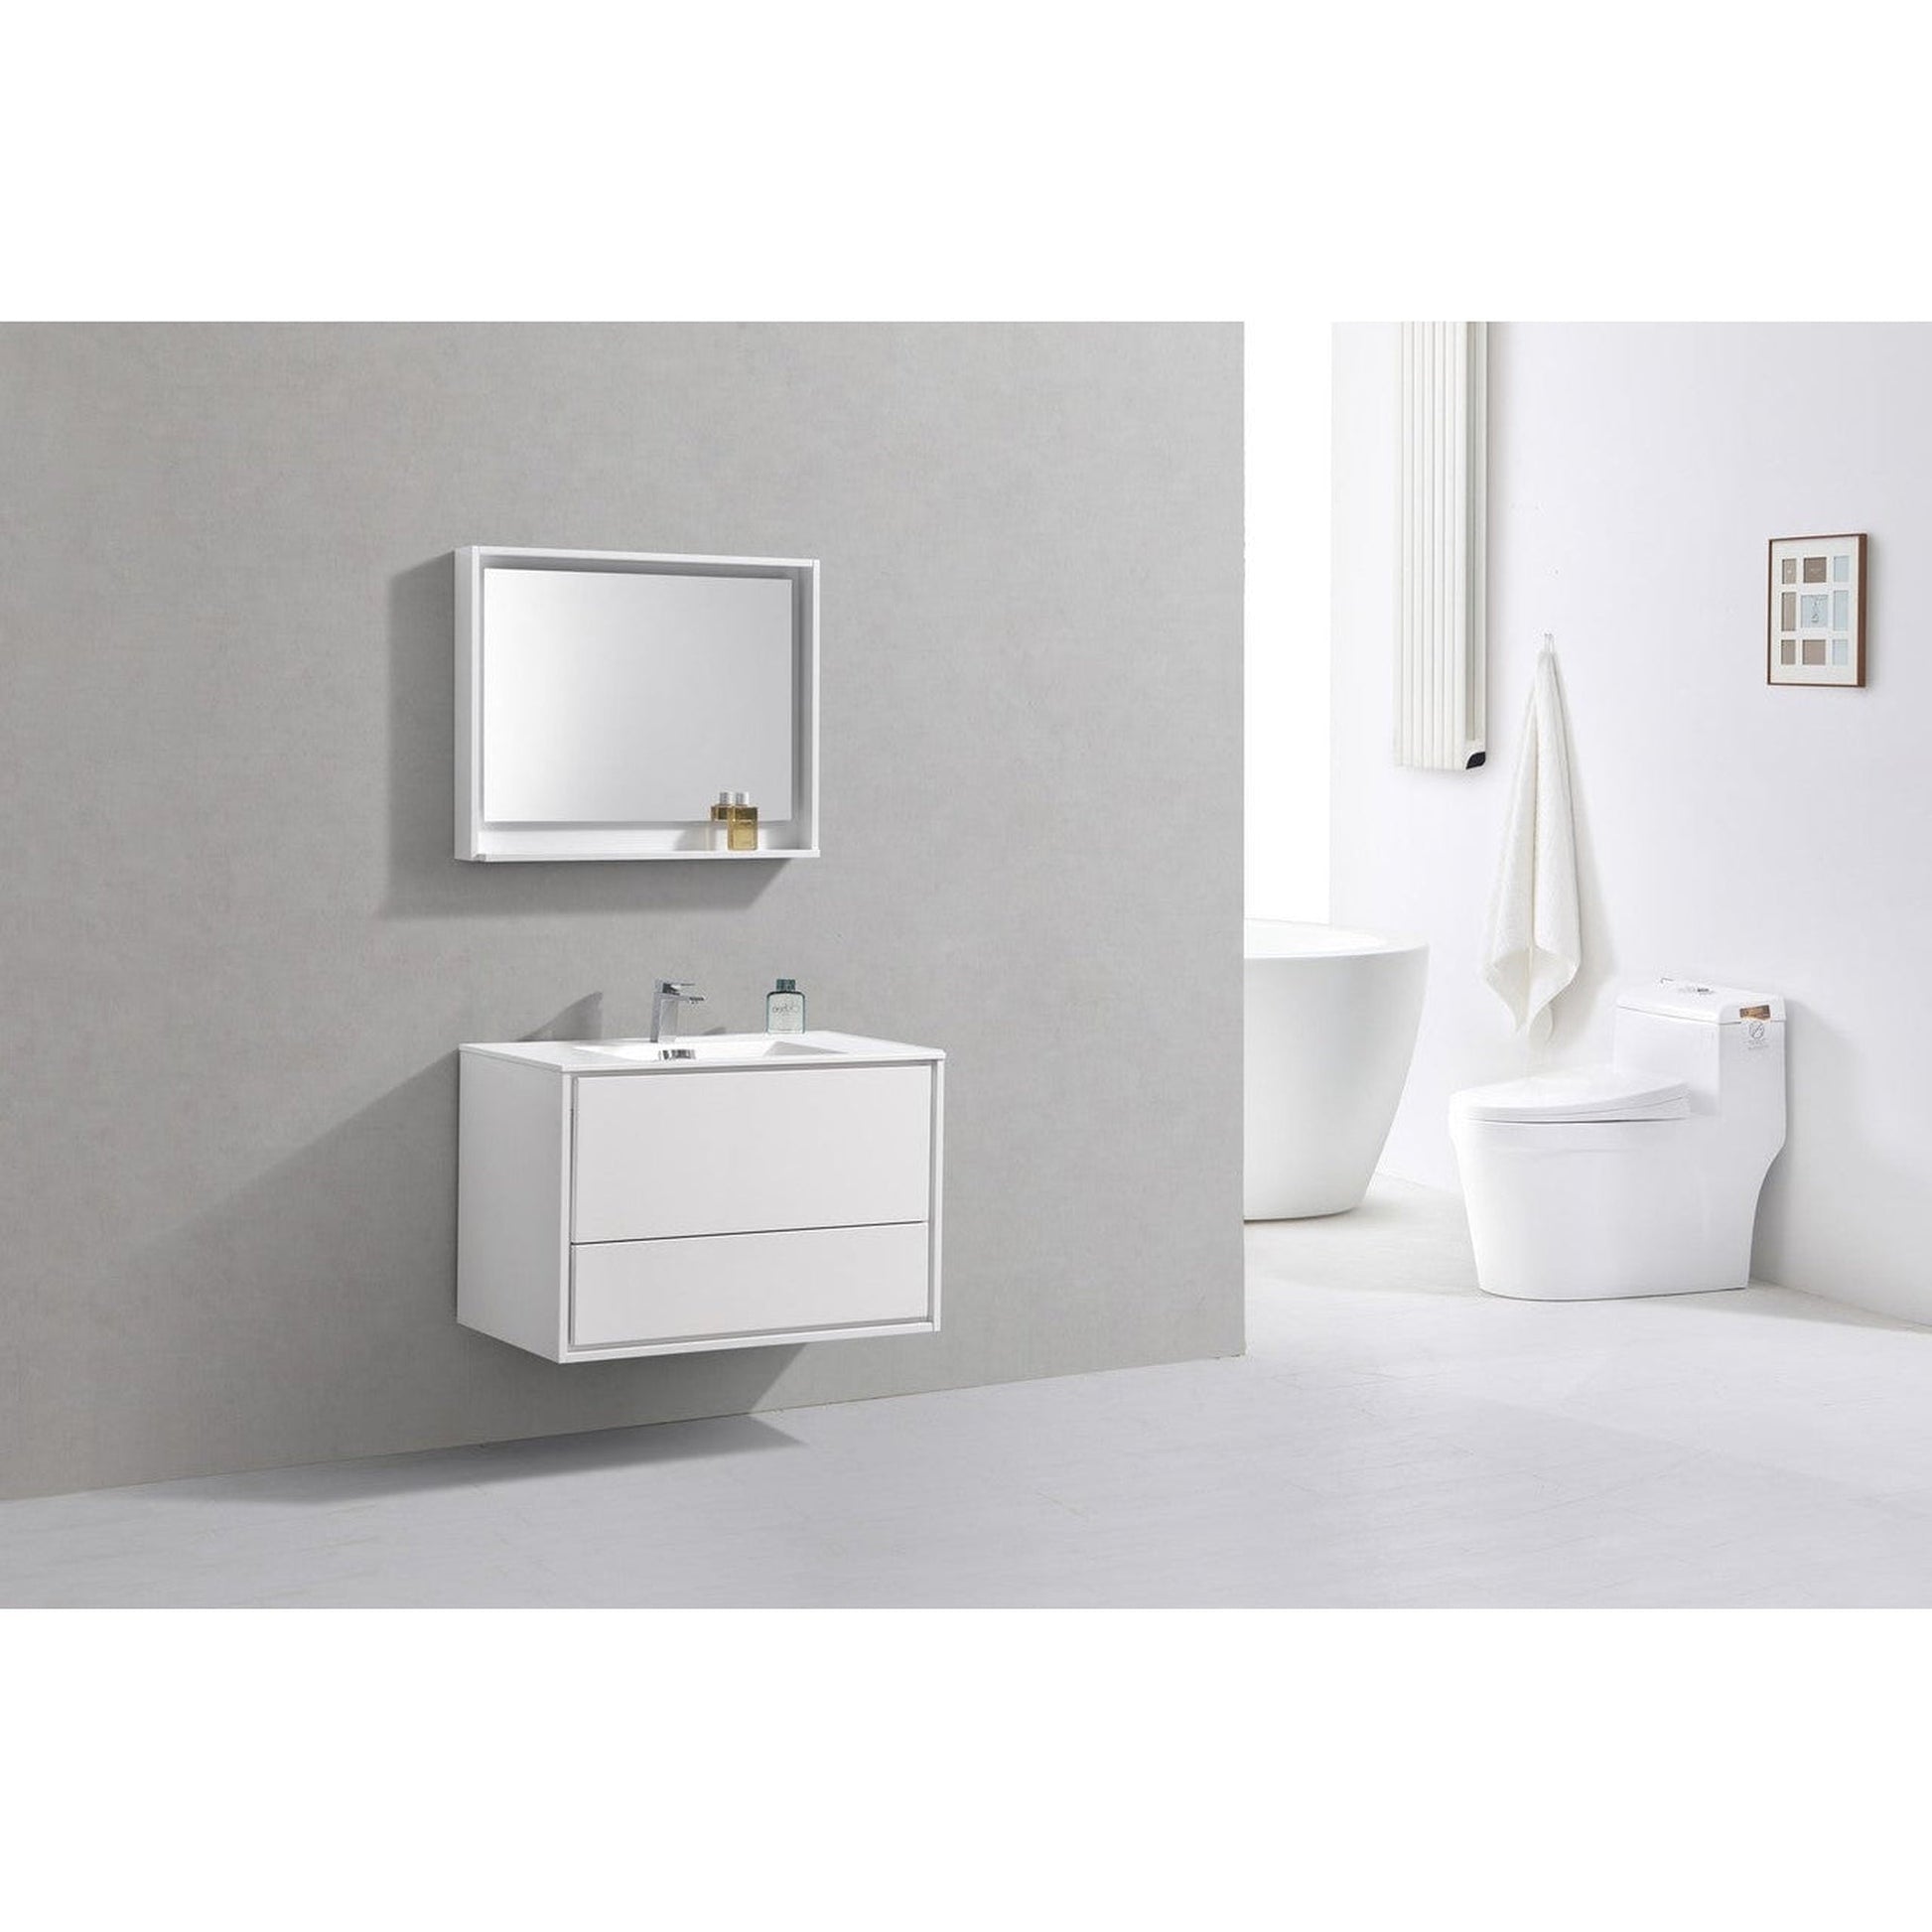 KubeBath DeLusso 36" High Gloss White Wall-Mounted Modern Bathroom Vanity With Single Integrated Acrylic Sink With Overflow